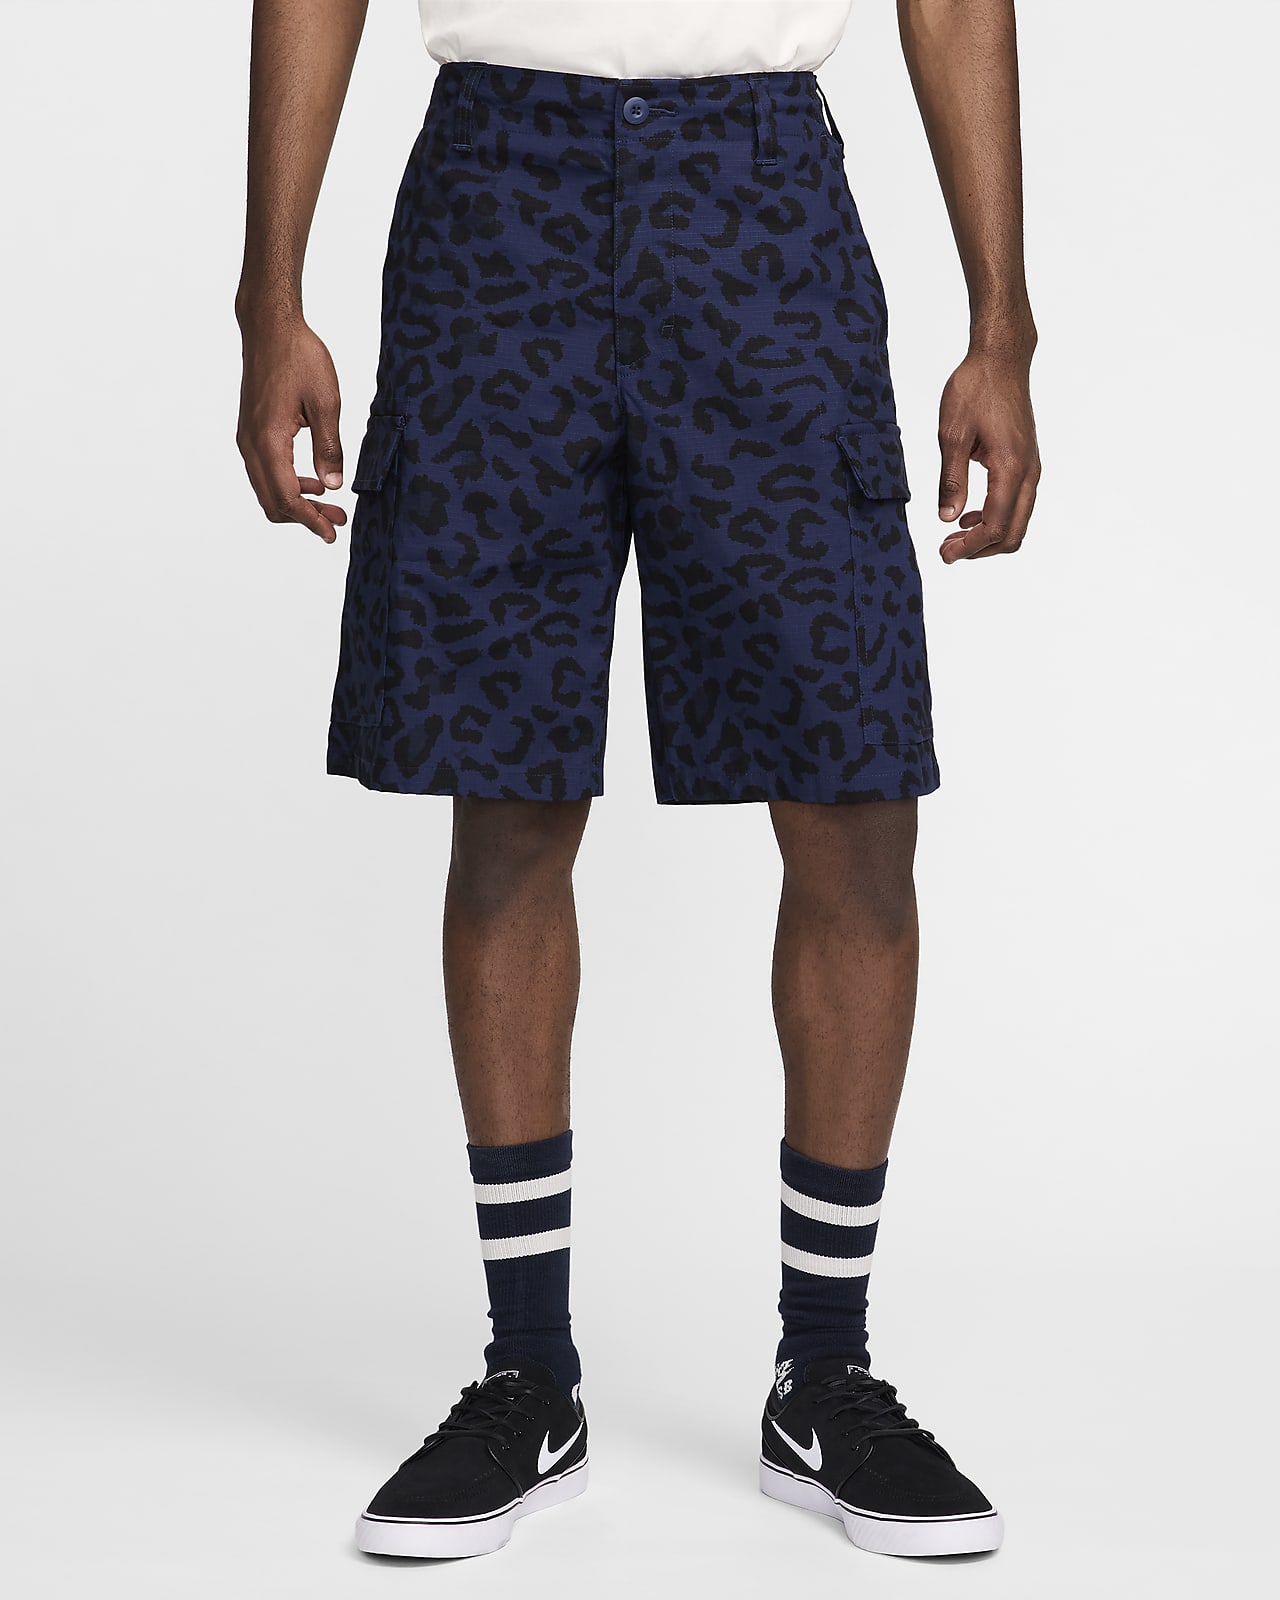 Nike SB Kearny Shorts mit durchgehendem Print für Herren